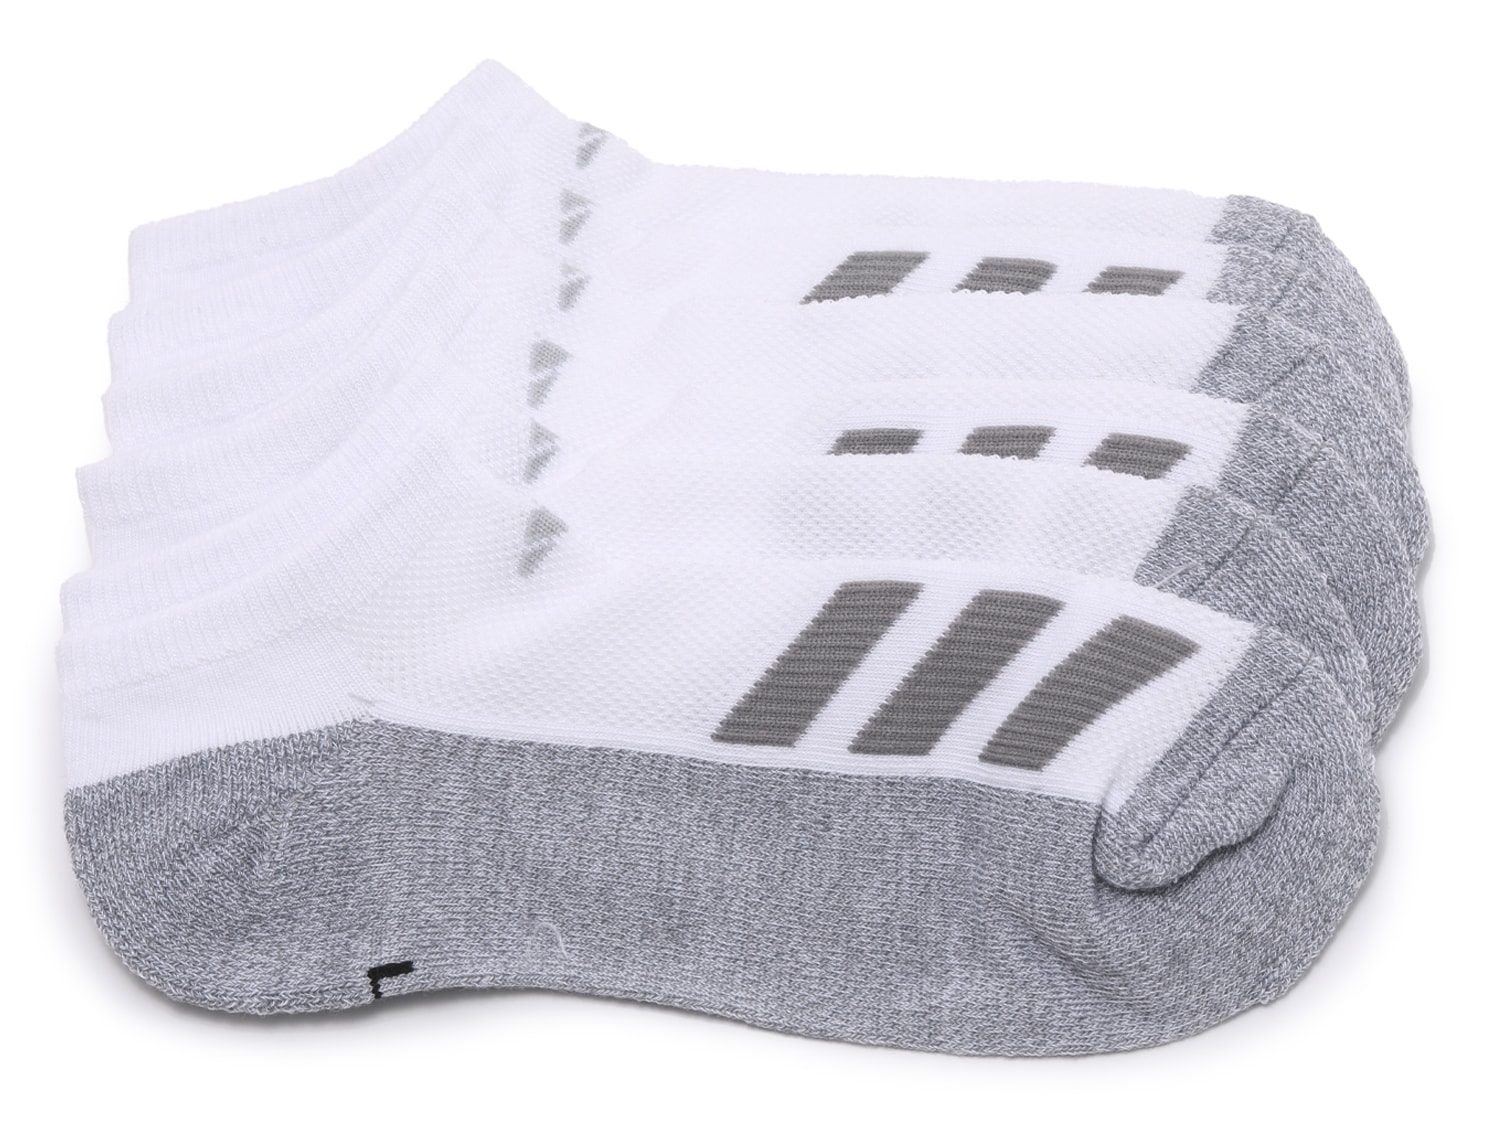 adidas Athletic Cushioned Low-Cut Socks 6 Pairs XL - White